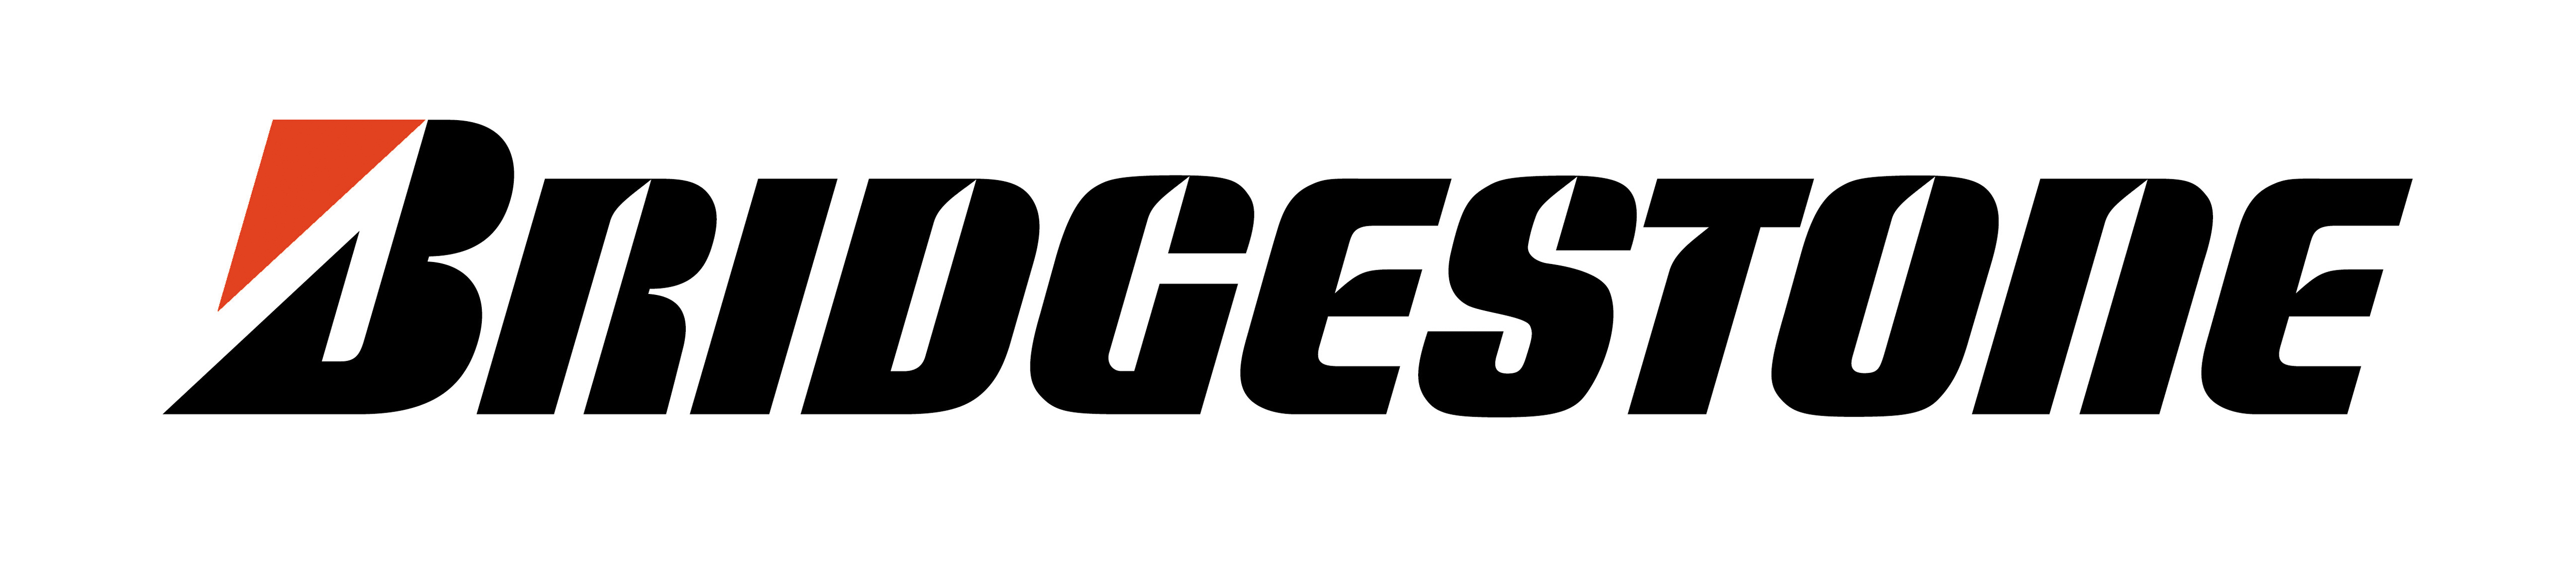 bridgestone-logo — Hamlin Cycles, LLC